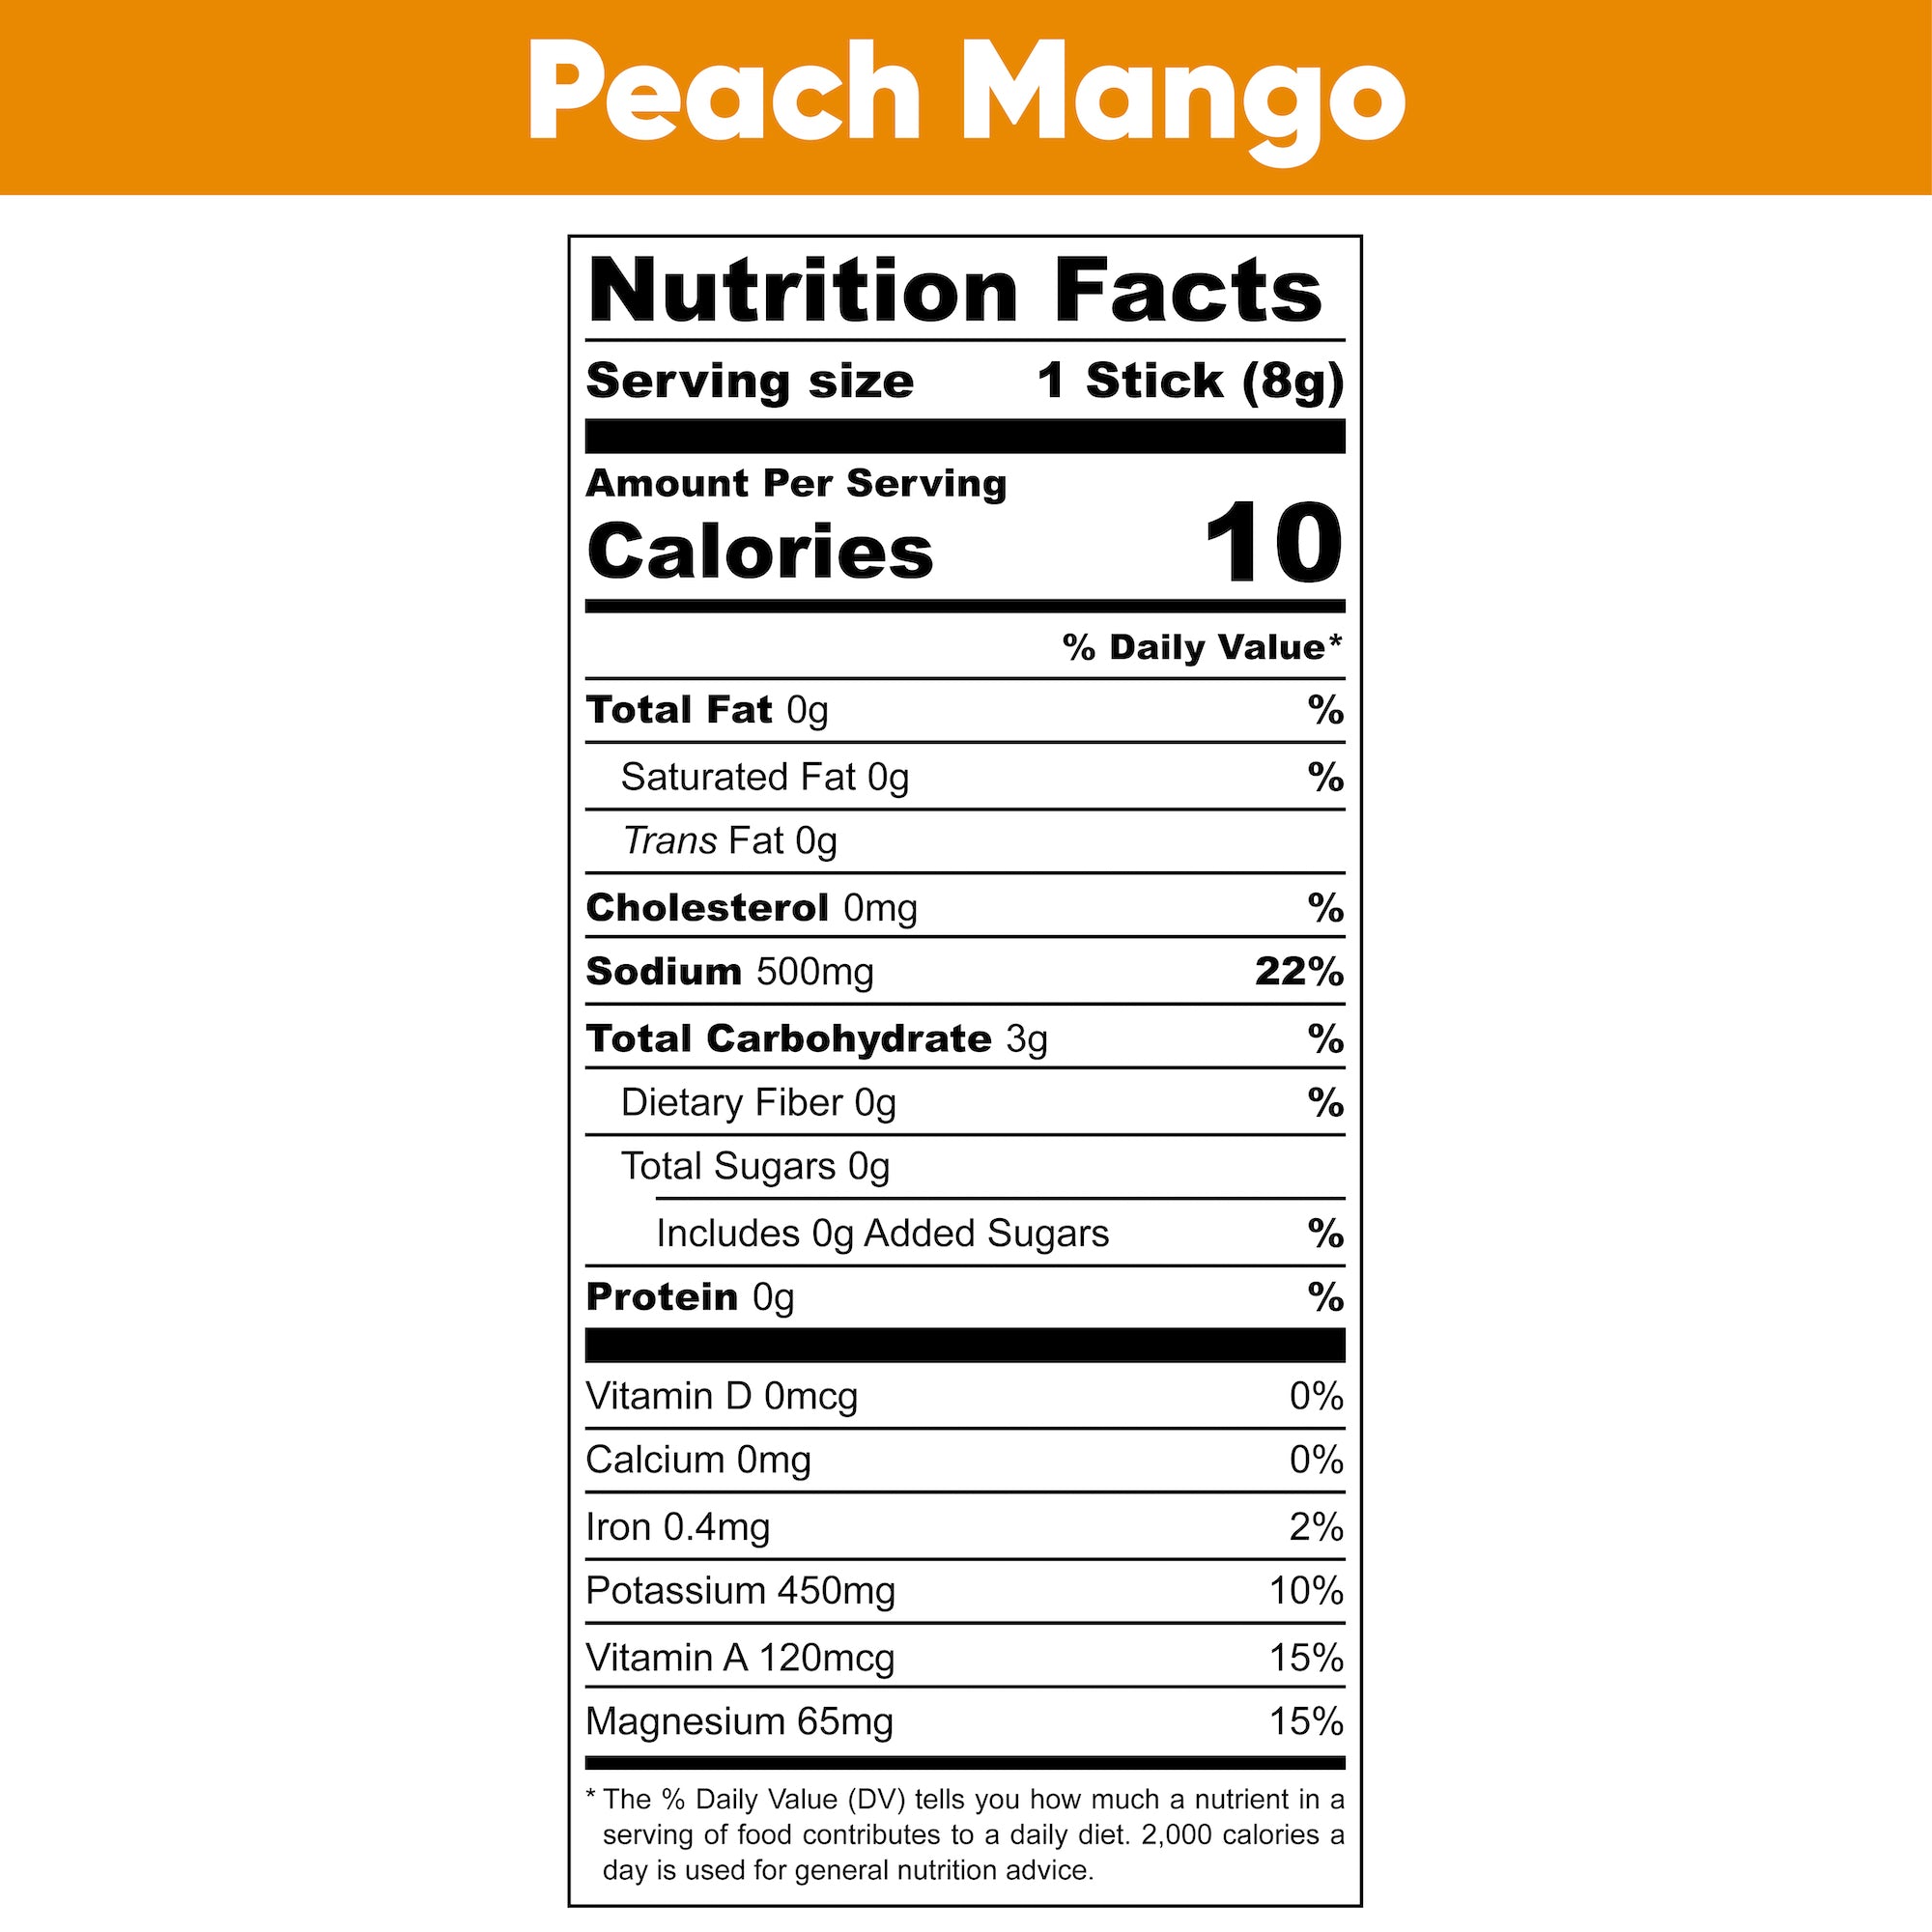 Peach Mango Nutrition Facts. Serving Size: 1 Stick (5 grams). Amount Per Serving. Calories: 10. % Daily Value. Total Fat: 0 grams, 0%. Saturated Fat: 0 grams, 0%. Trans Fat: 0 grams. Cholesterol: 0 milligrams, 0%. Sodium: 500 milligrams, 22%. Total Carbohydrate: 1 gram, 0%. Dietary Fiber: 0 grams, 0%. Total Sugars: 0 grams. Includes: 0 grams Added Sugars, 0%. Protein: 0 grams, 0%. Vitamin D: 0 micrograms, 0%. Calcium: 10 milligrams, 0%. Iron: 0.4 milligrams, 2%. Potassium: 380 milligrams, 8%. Vitamin A: 120 micrograms, 15%. Magnesium: 60 milligrams, 15%.